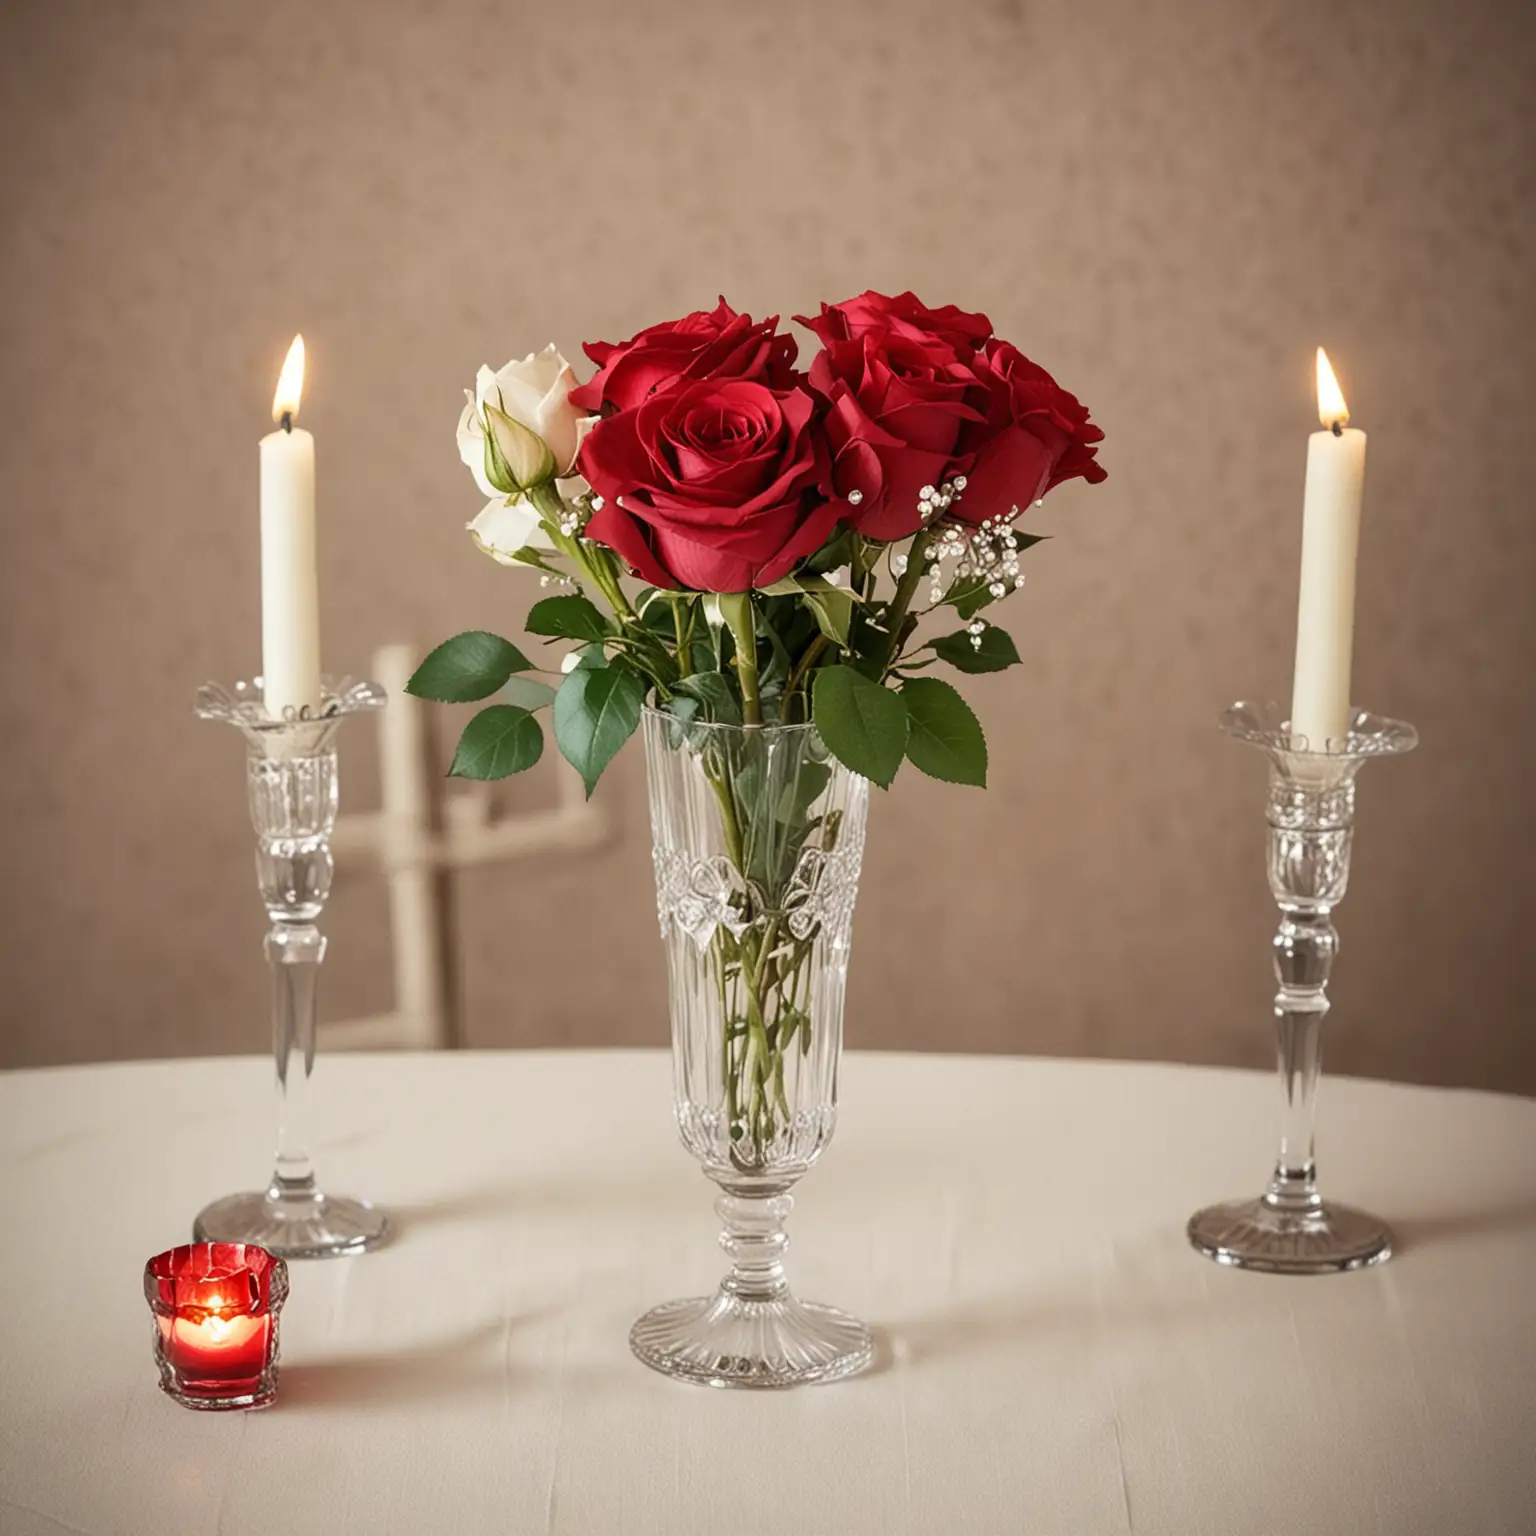 DIY-Vintage-Wedding-Centerpieces-Red-Roses-in-Antique-Crystal-Vase